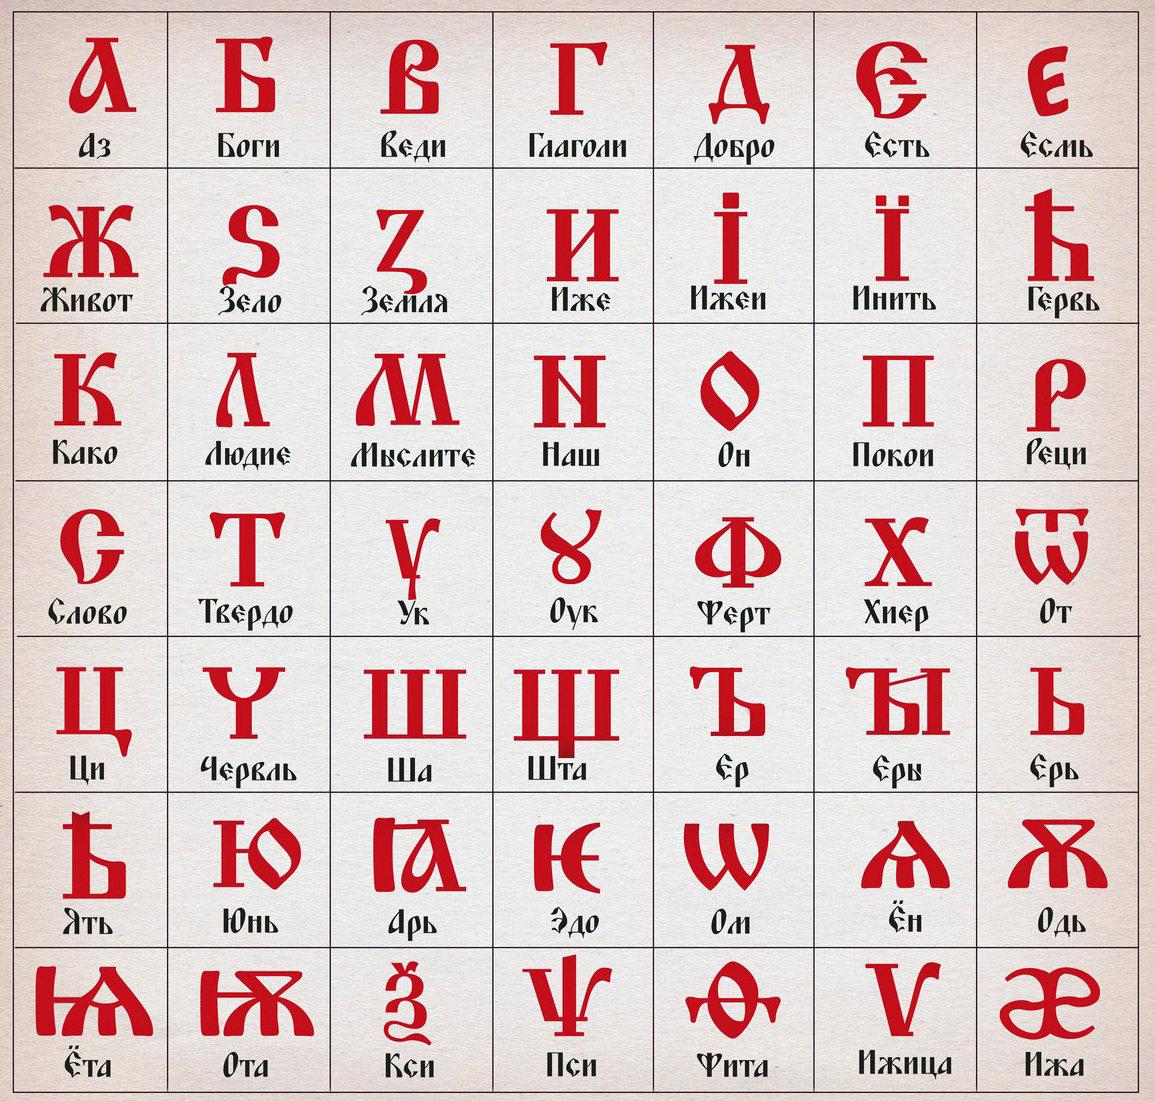 Буквы формата А4. Имитация старославянской азбуки - скачать шаблоны